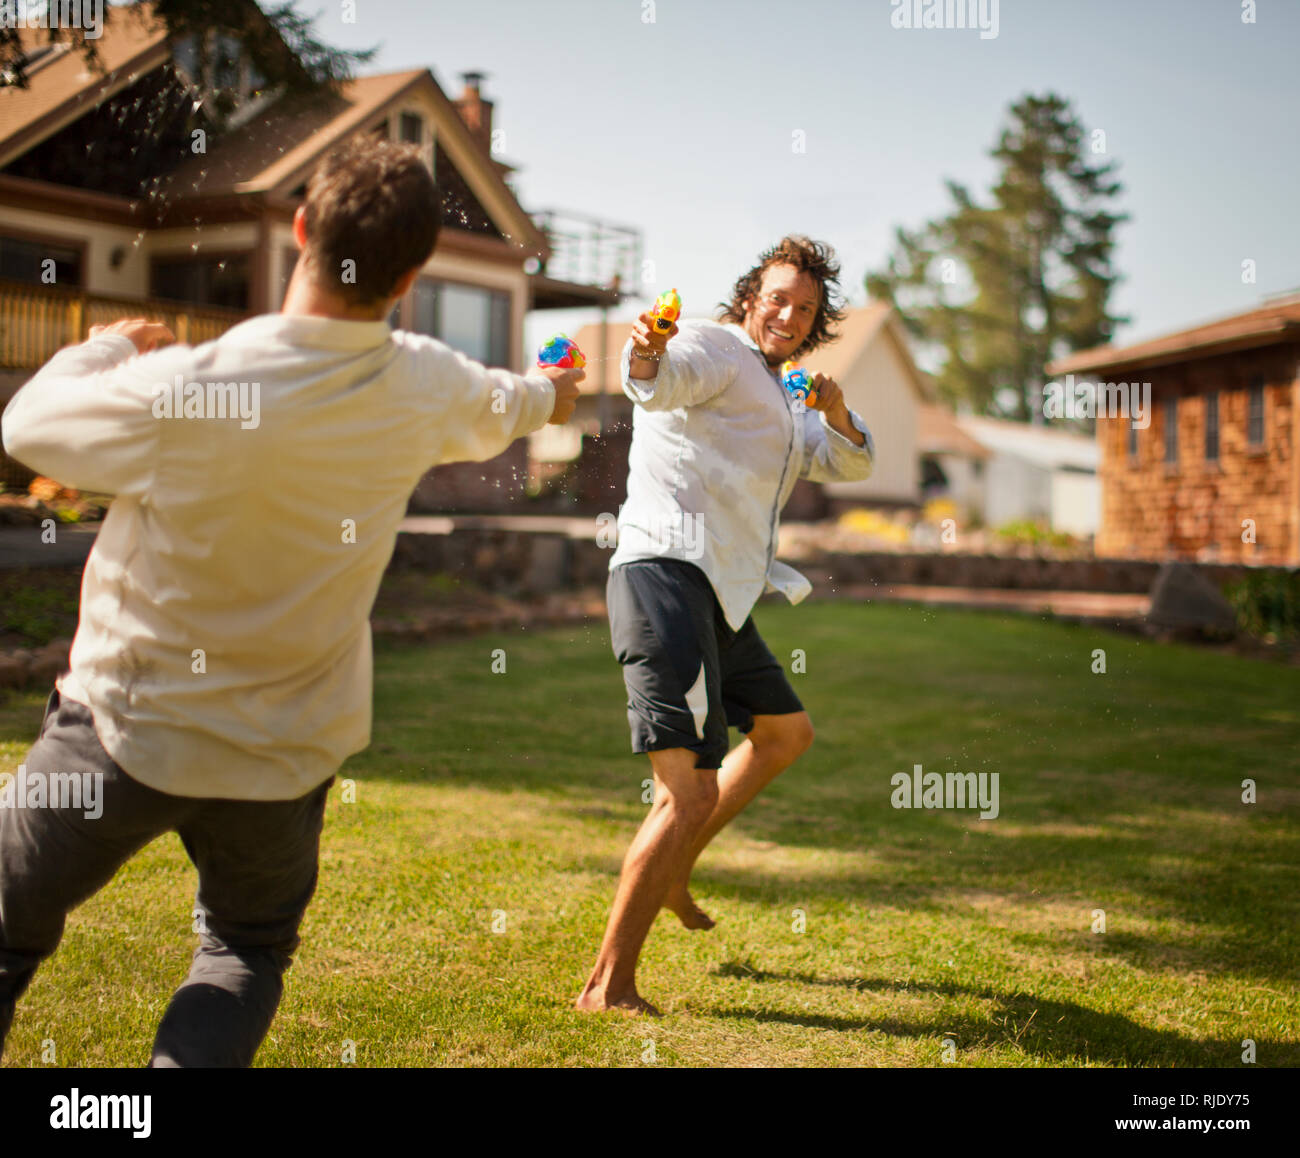 Two men having a water gun fight in a backyard. Stock Photo